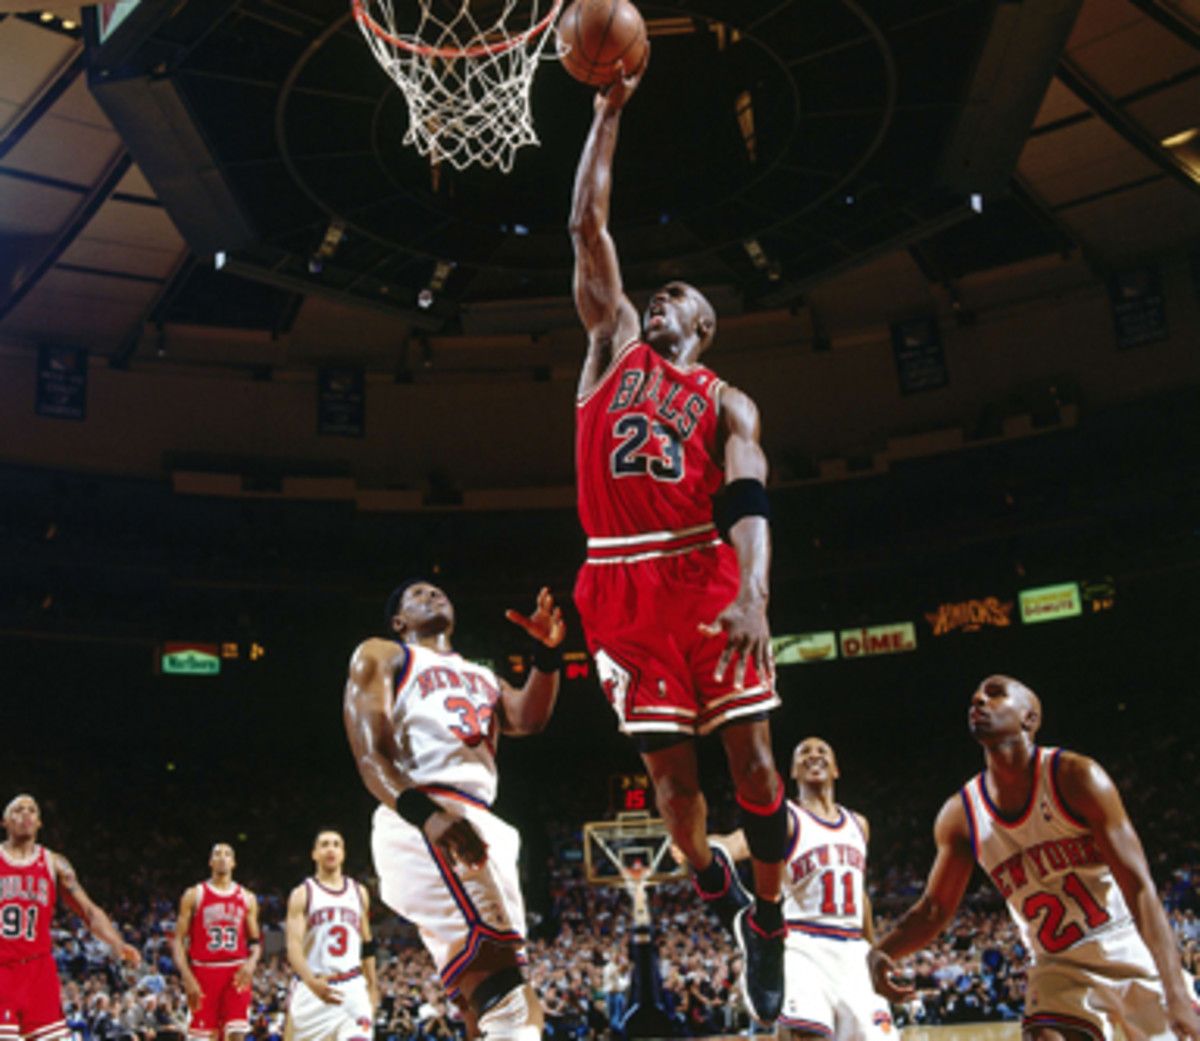 Michael Jordan can still dunk at age 50